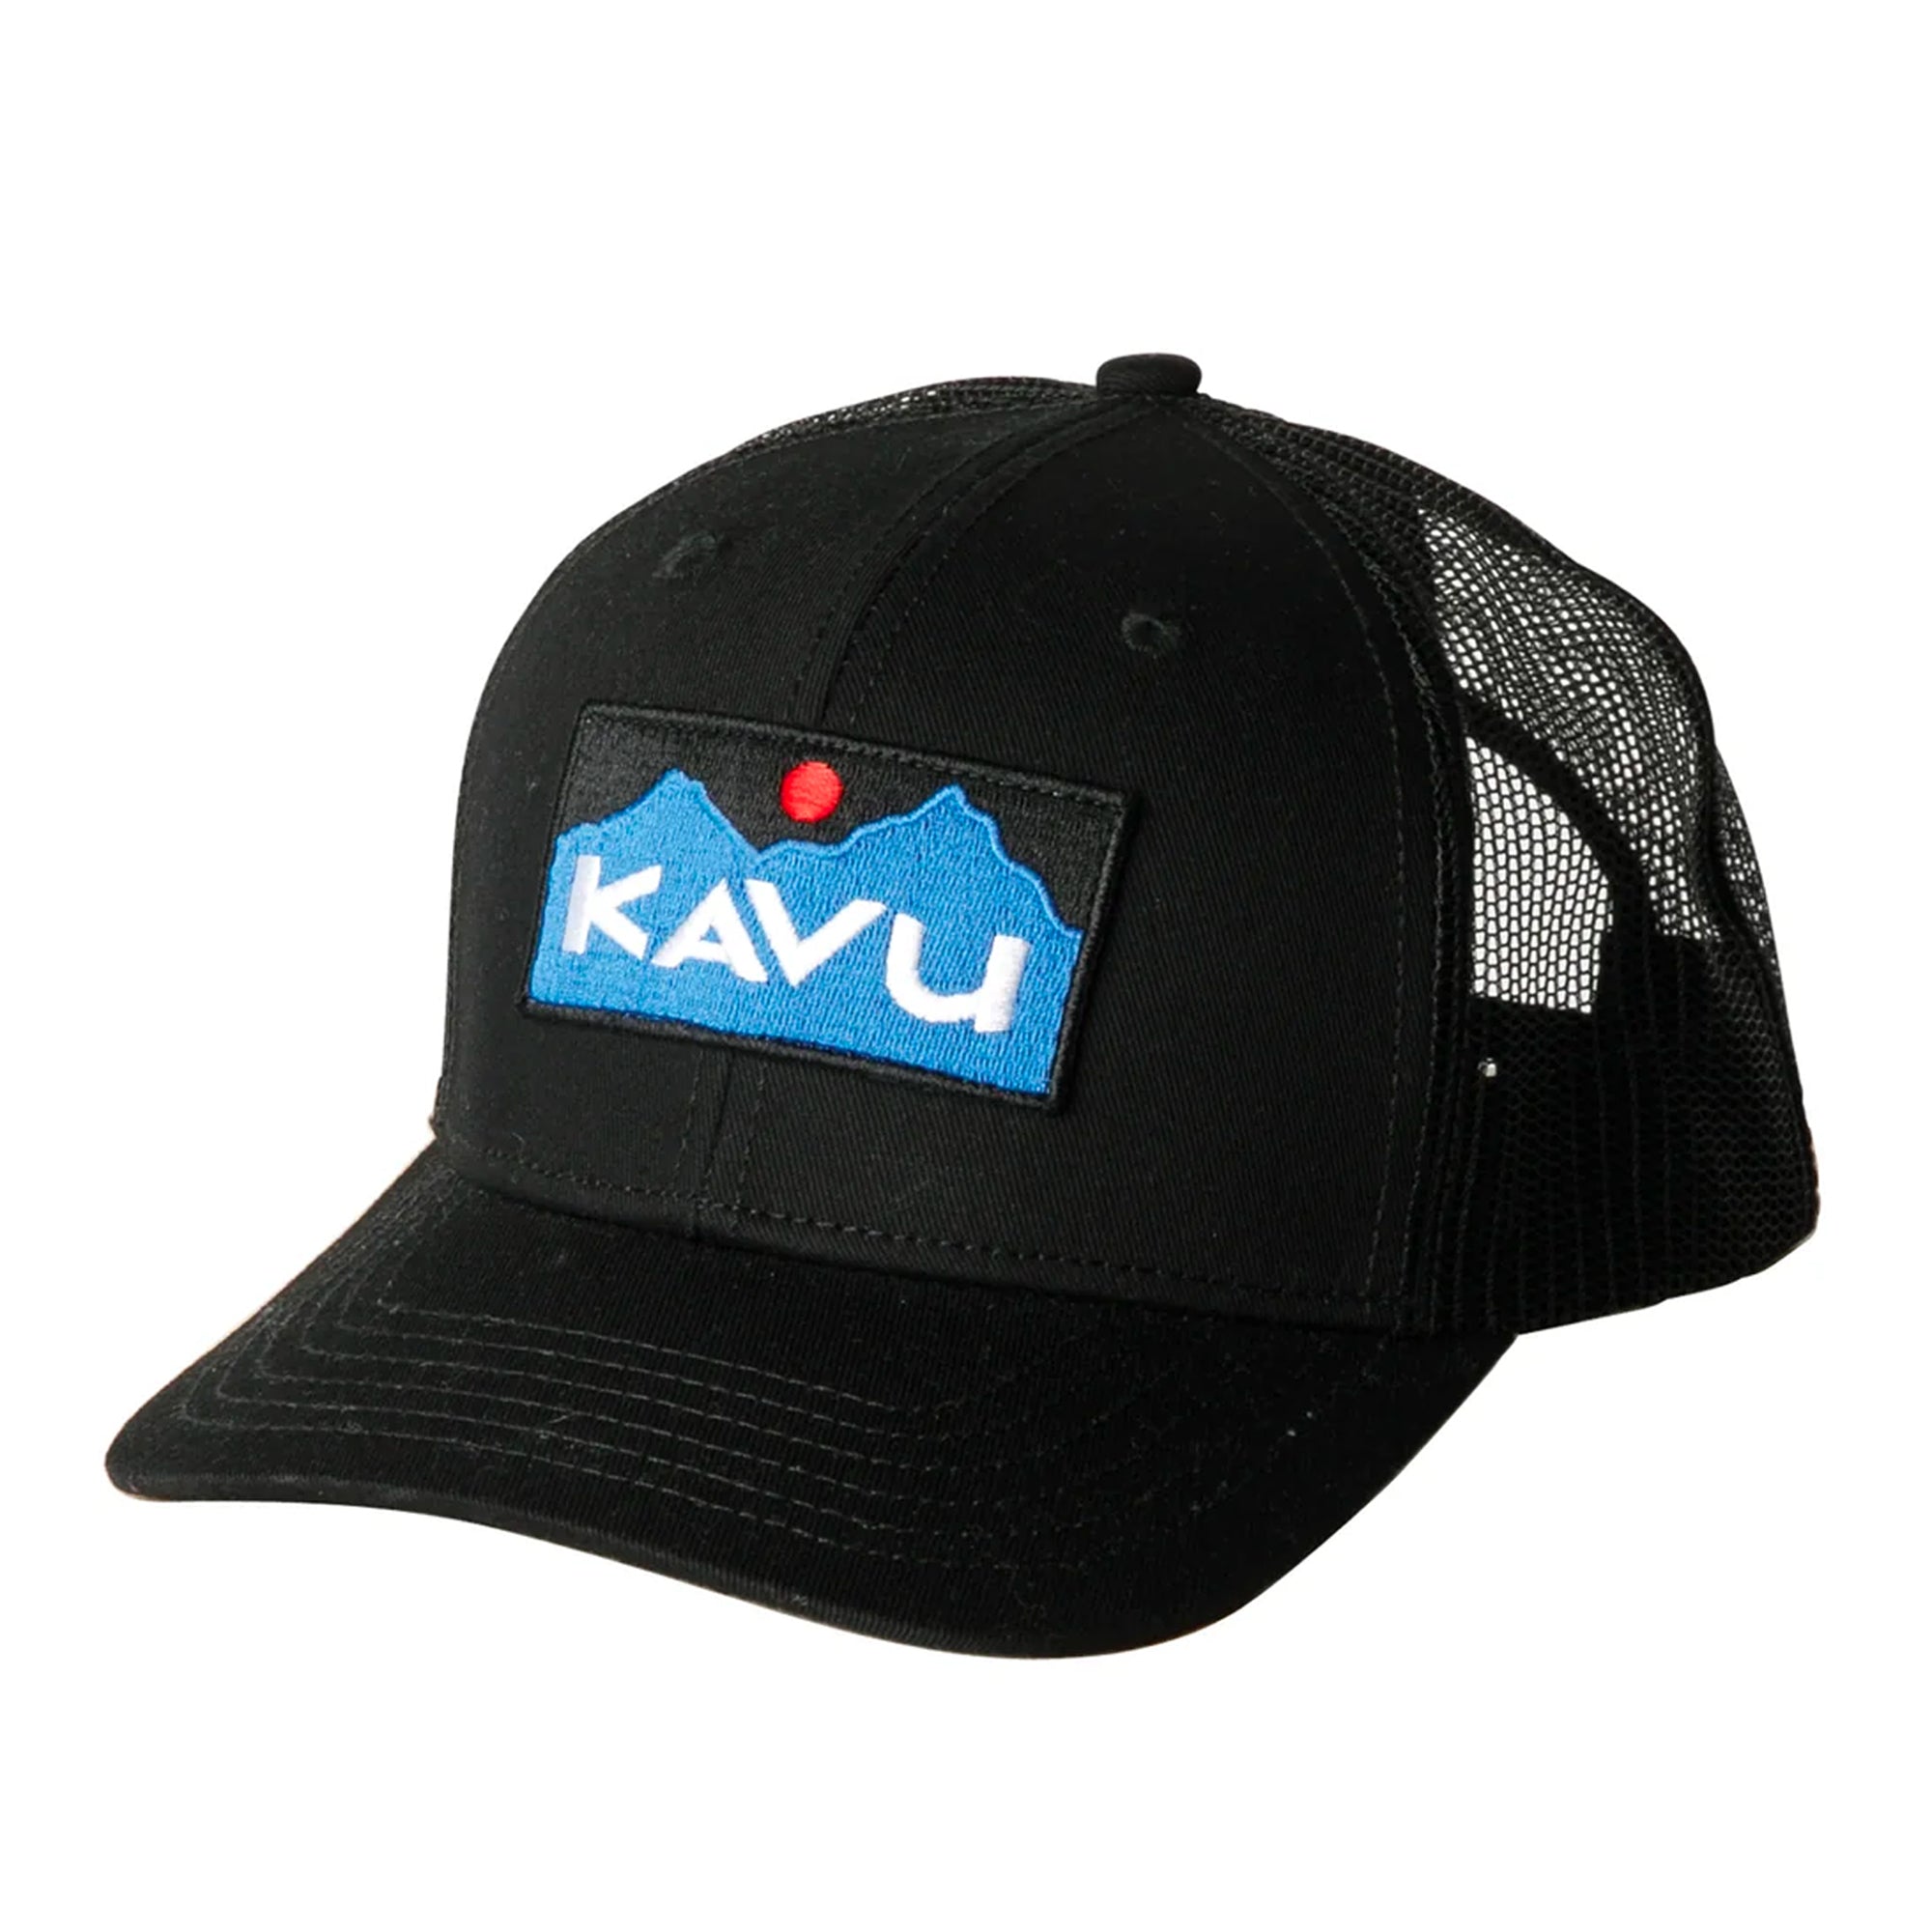 KAVU Above Standard Cap - Black